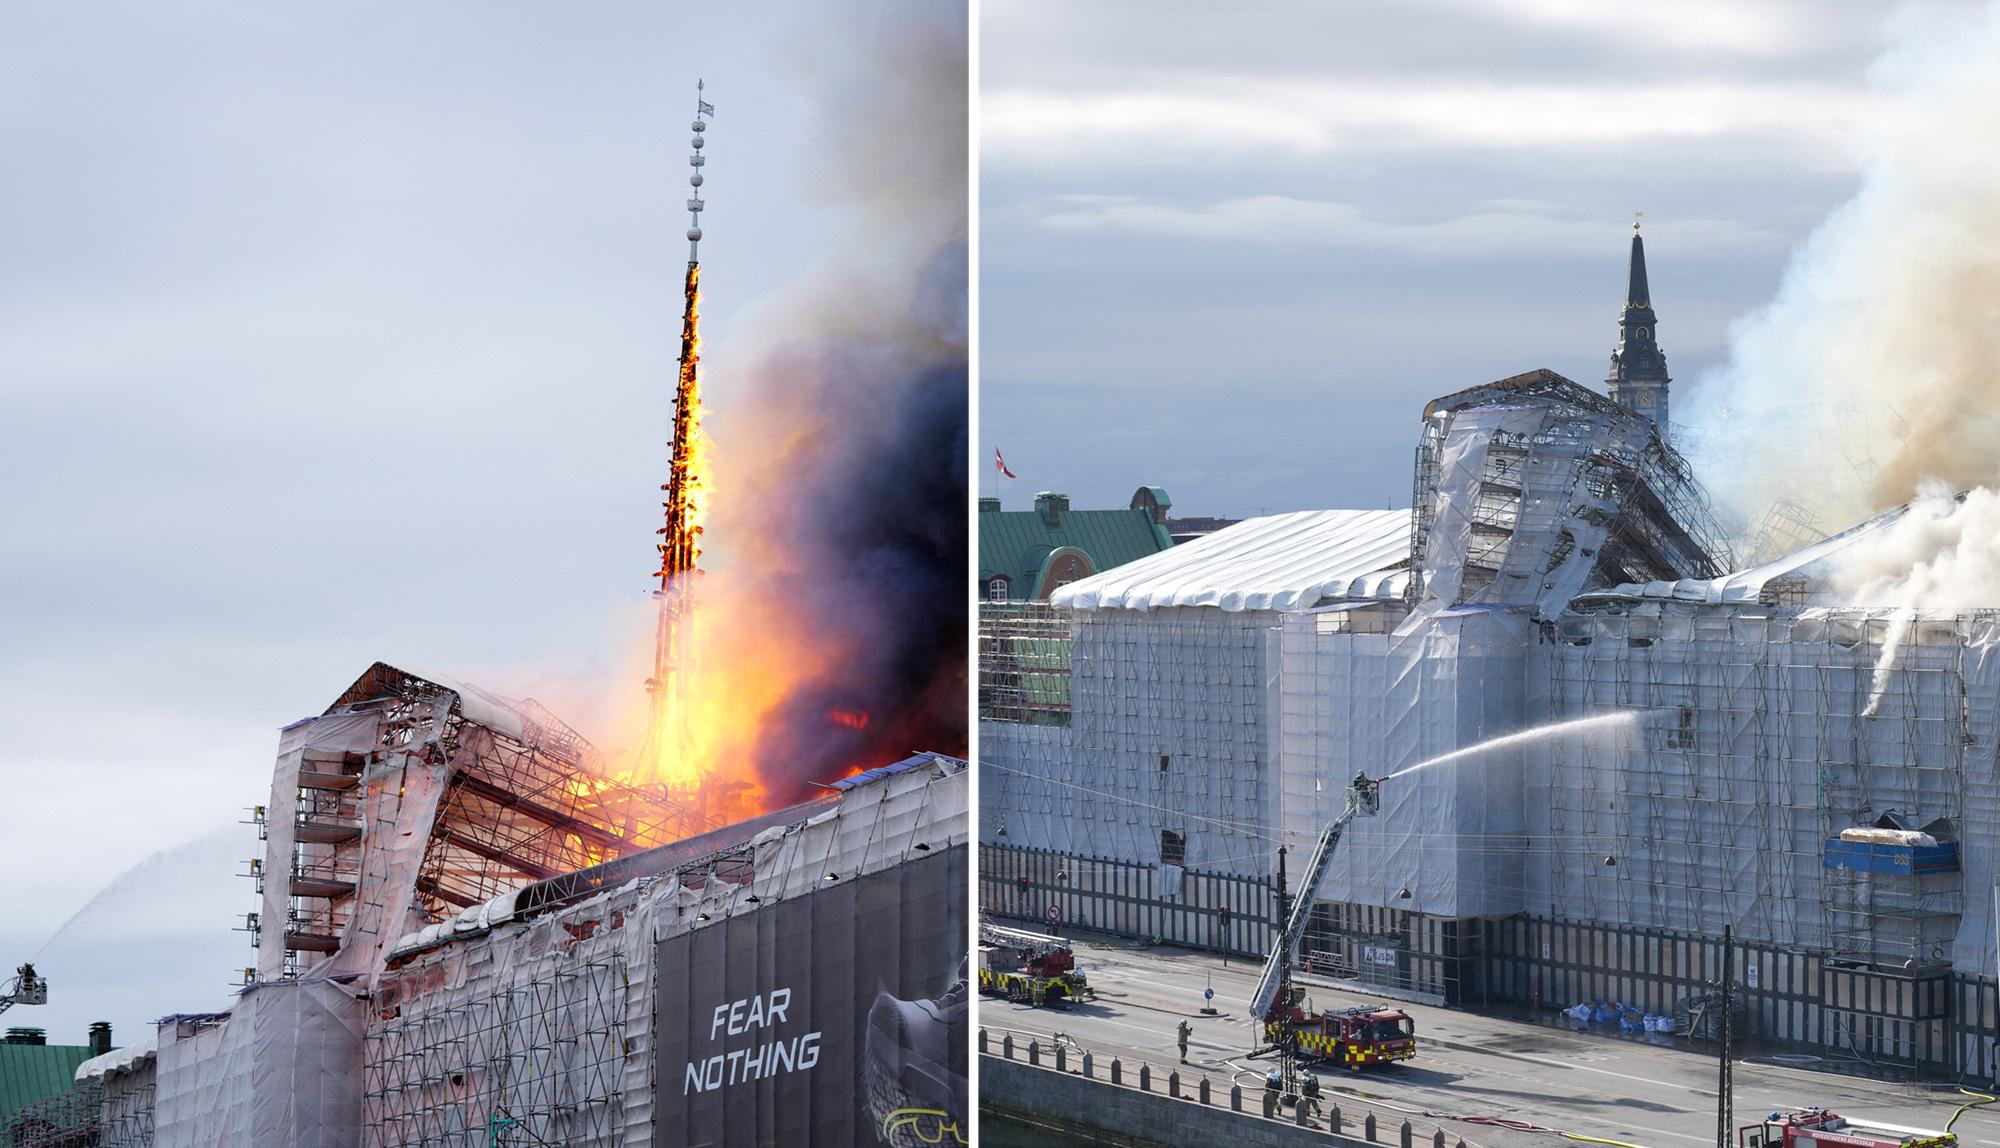 Spire Collapses as Copenhagen Stock Exchange Catches Fire